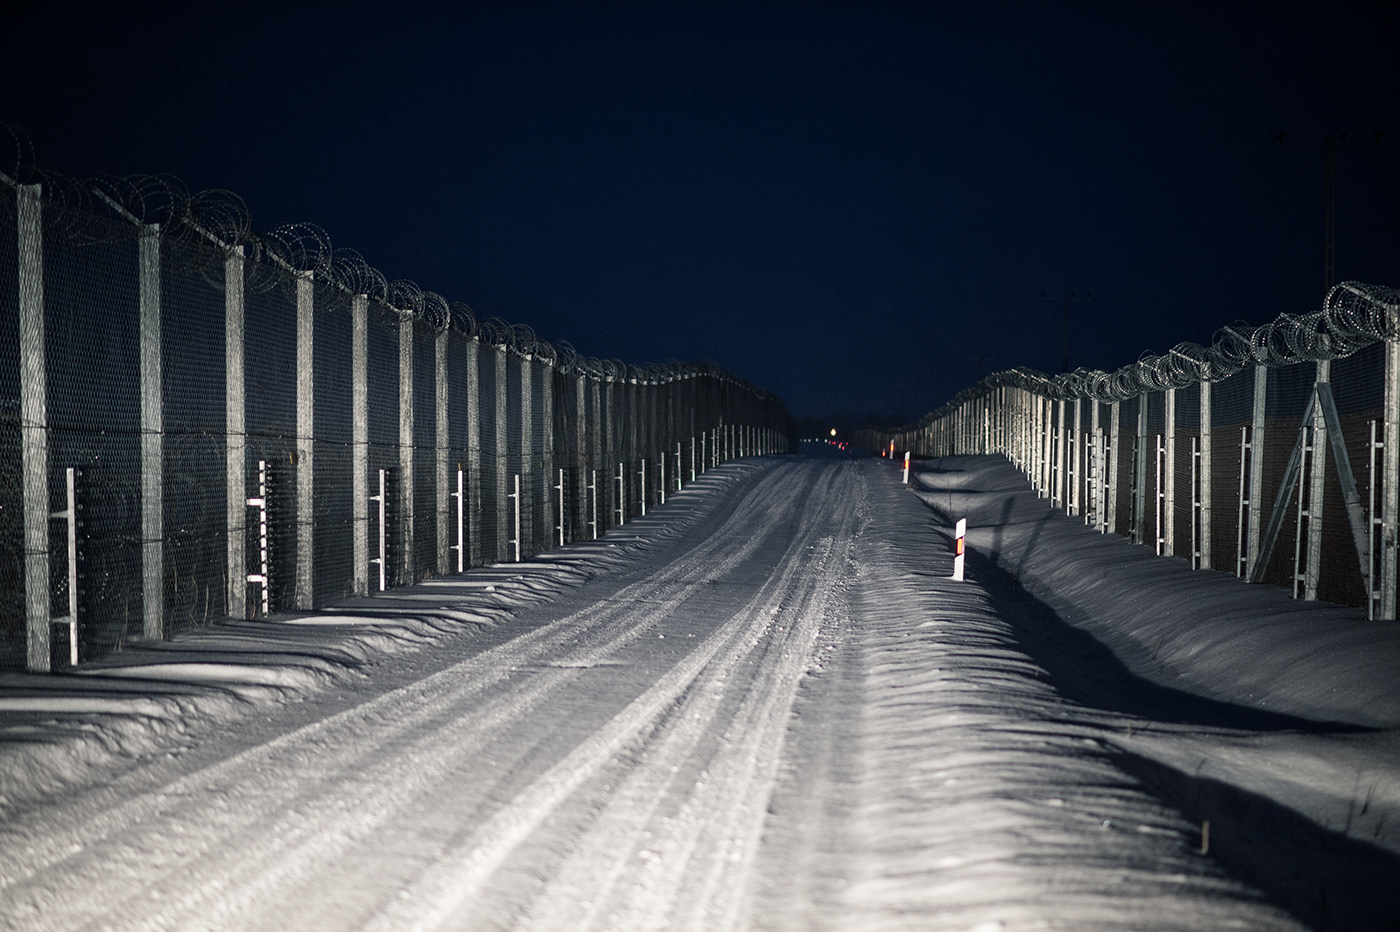 hungarian border fence borderfence border barrier hungary Serbia migration migrant crisis